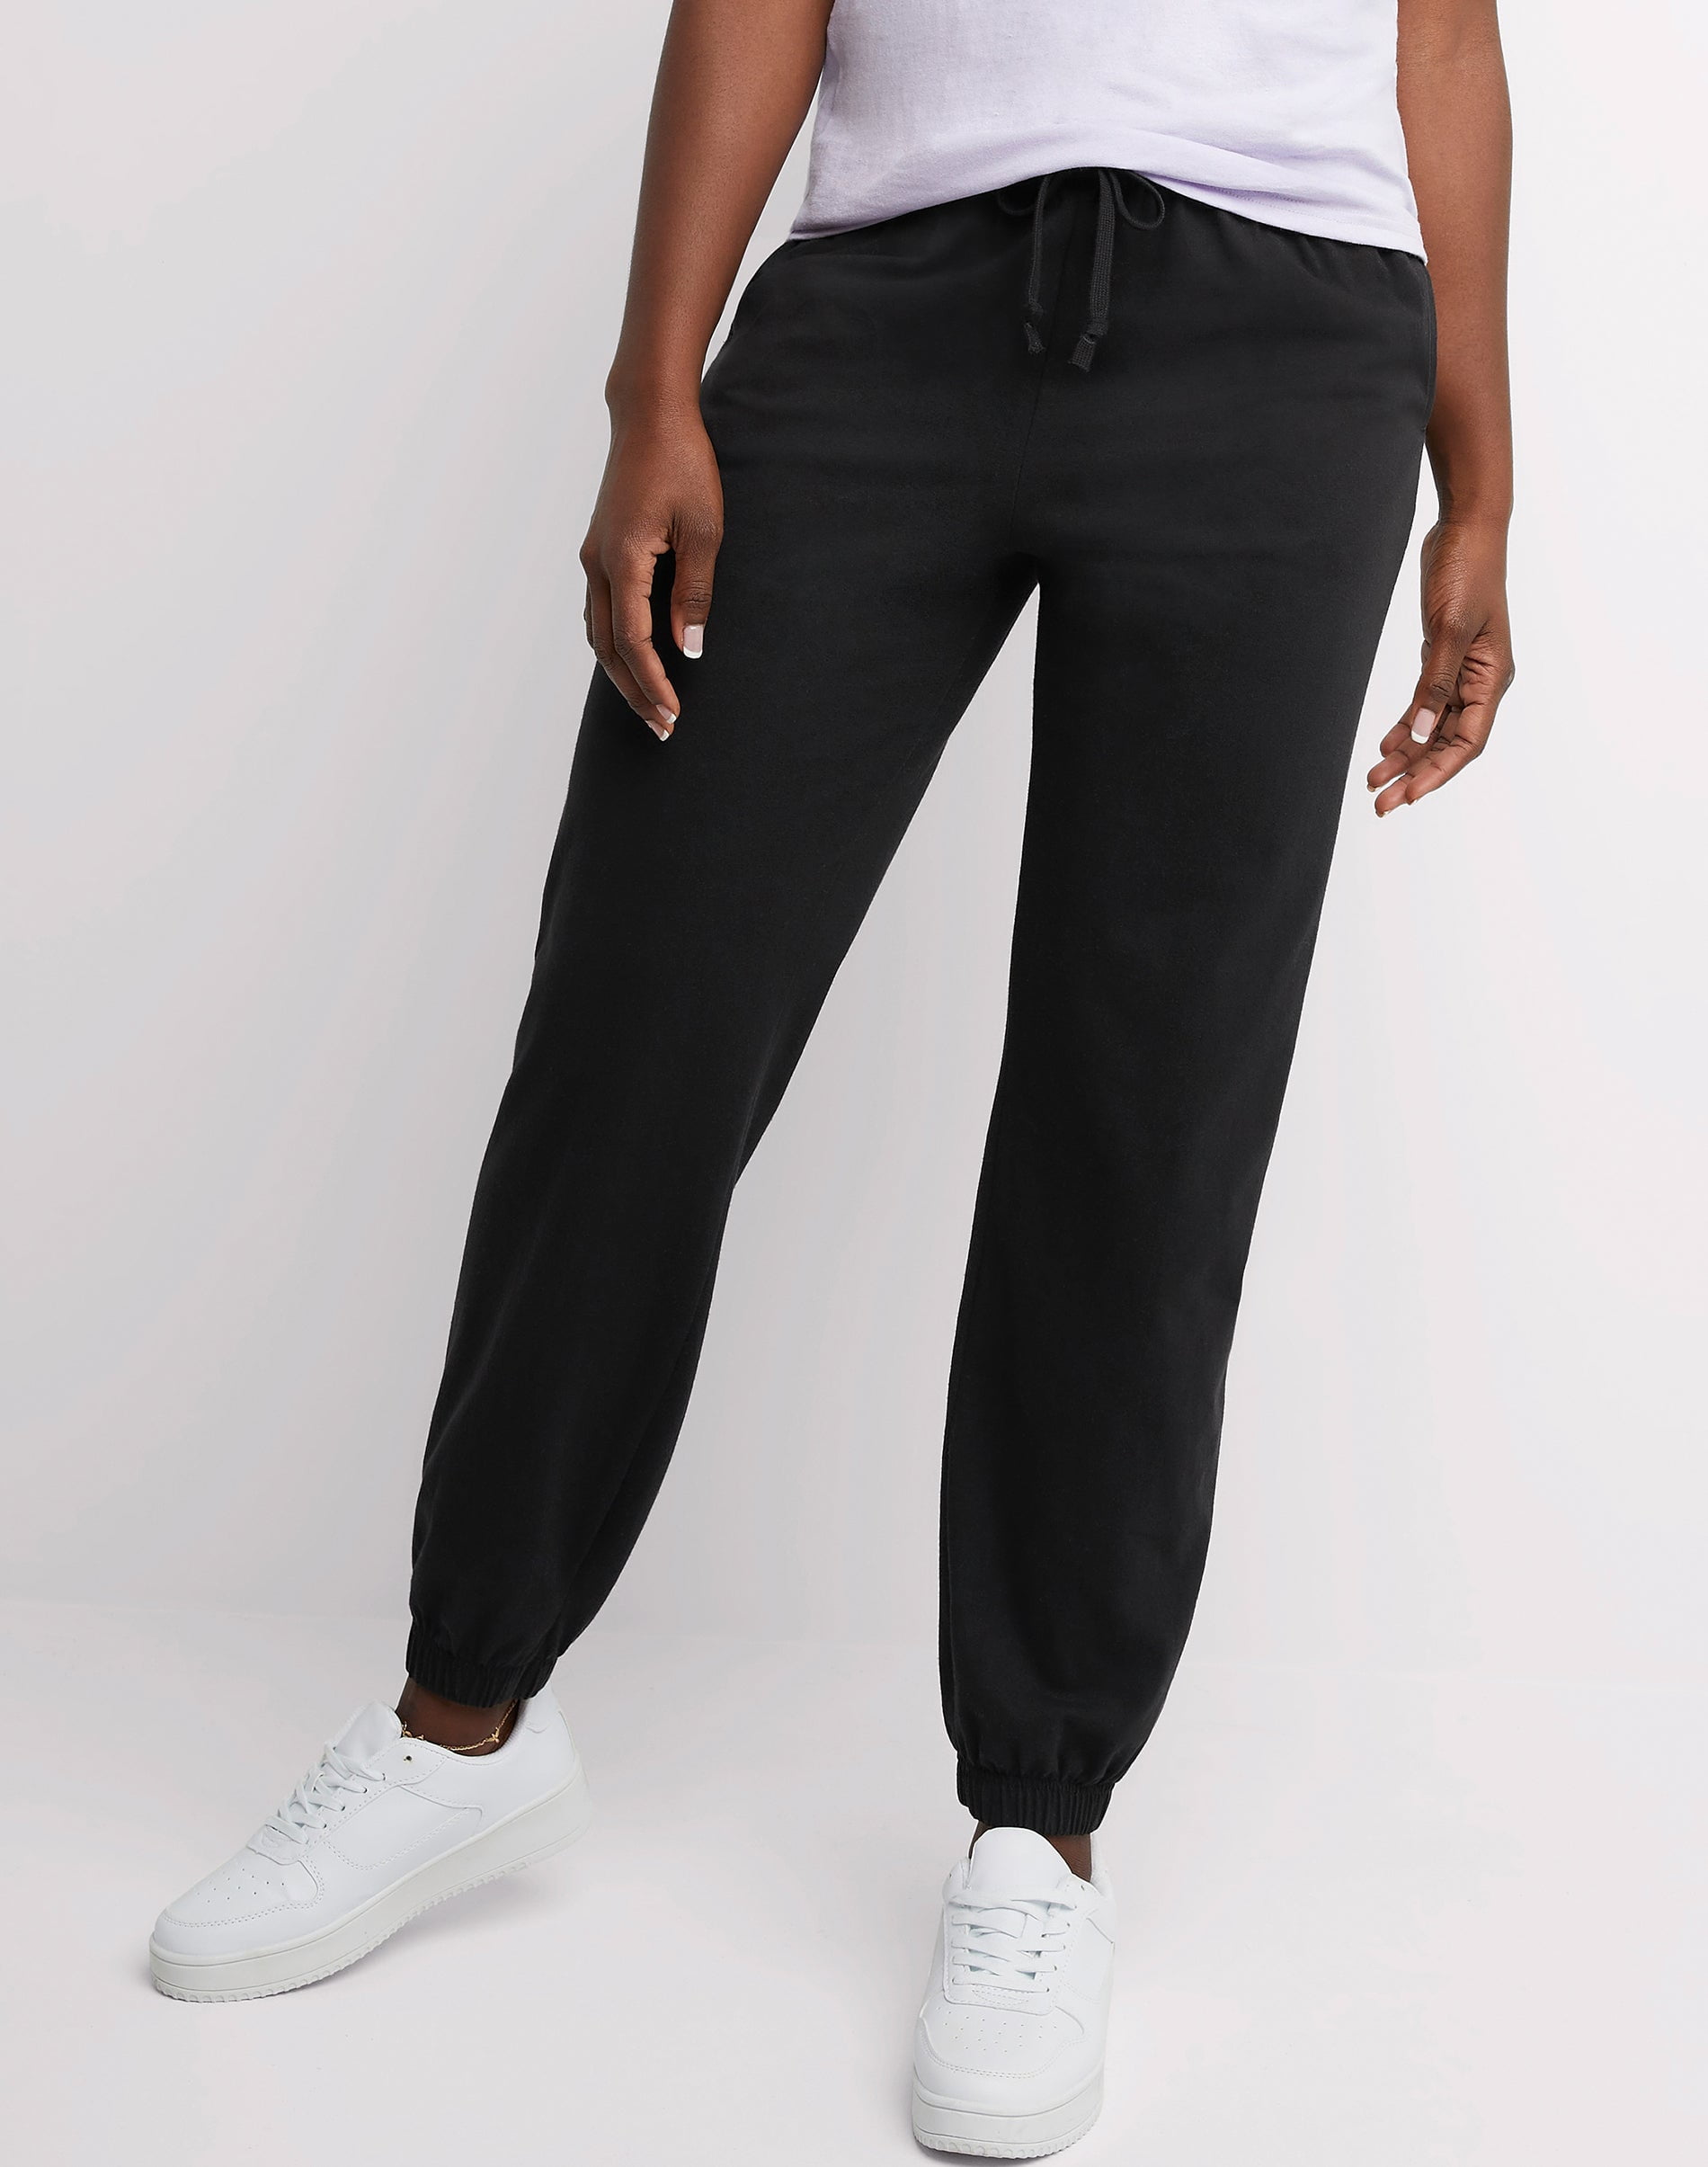 Hanes Essentials Women's Cotton Jersey Joggers, 29